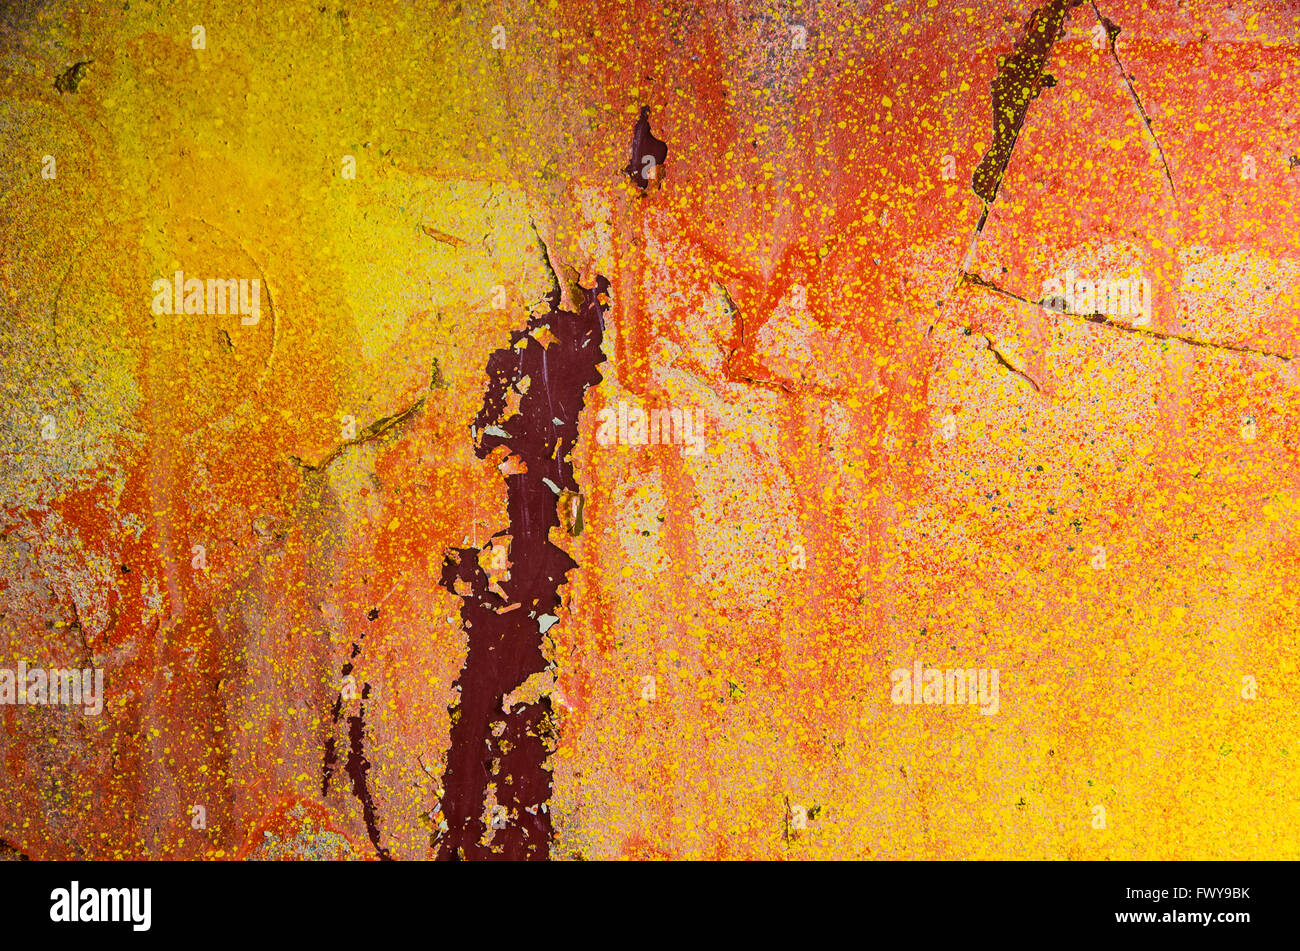 Abstrakt rot gelb hinterlegt Oberfläche gespritzt Farbe Stockfoto